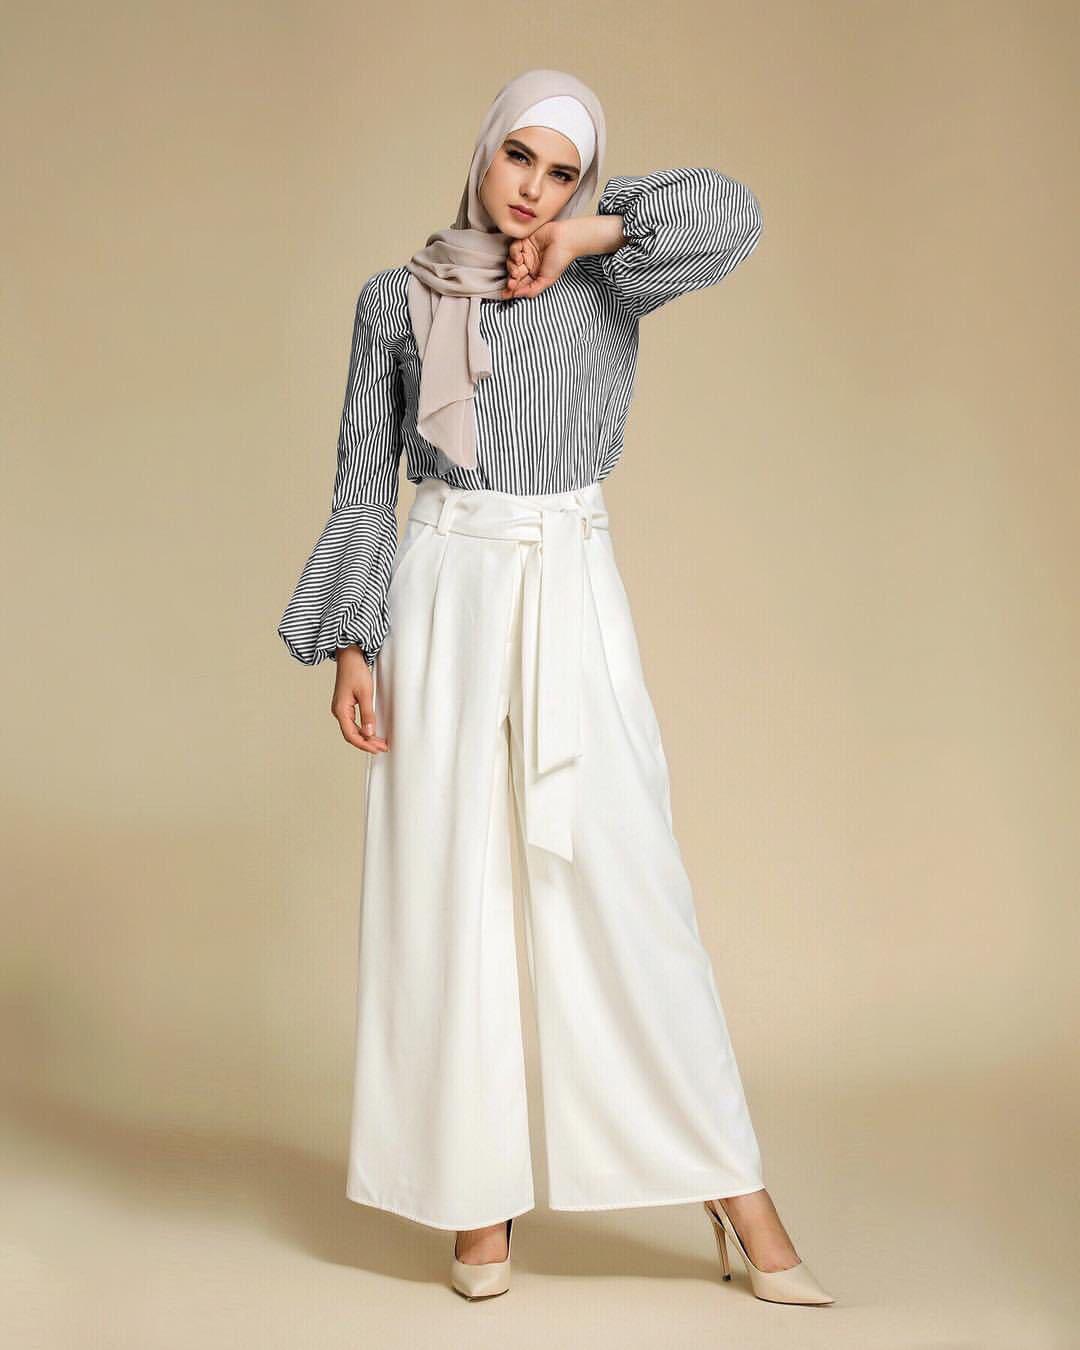 Women Sets Muslim Lantern Sleeve Blouse+Pants lslamic High Quality Full Cover Costumes Set Stripe Tops Shirt Wide Leg Trousers